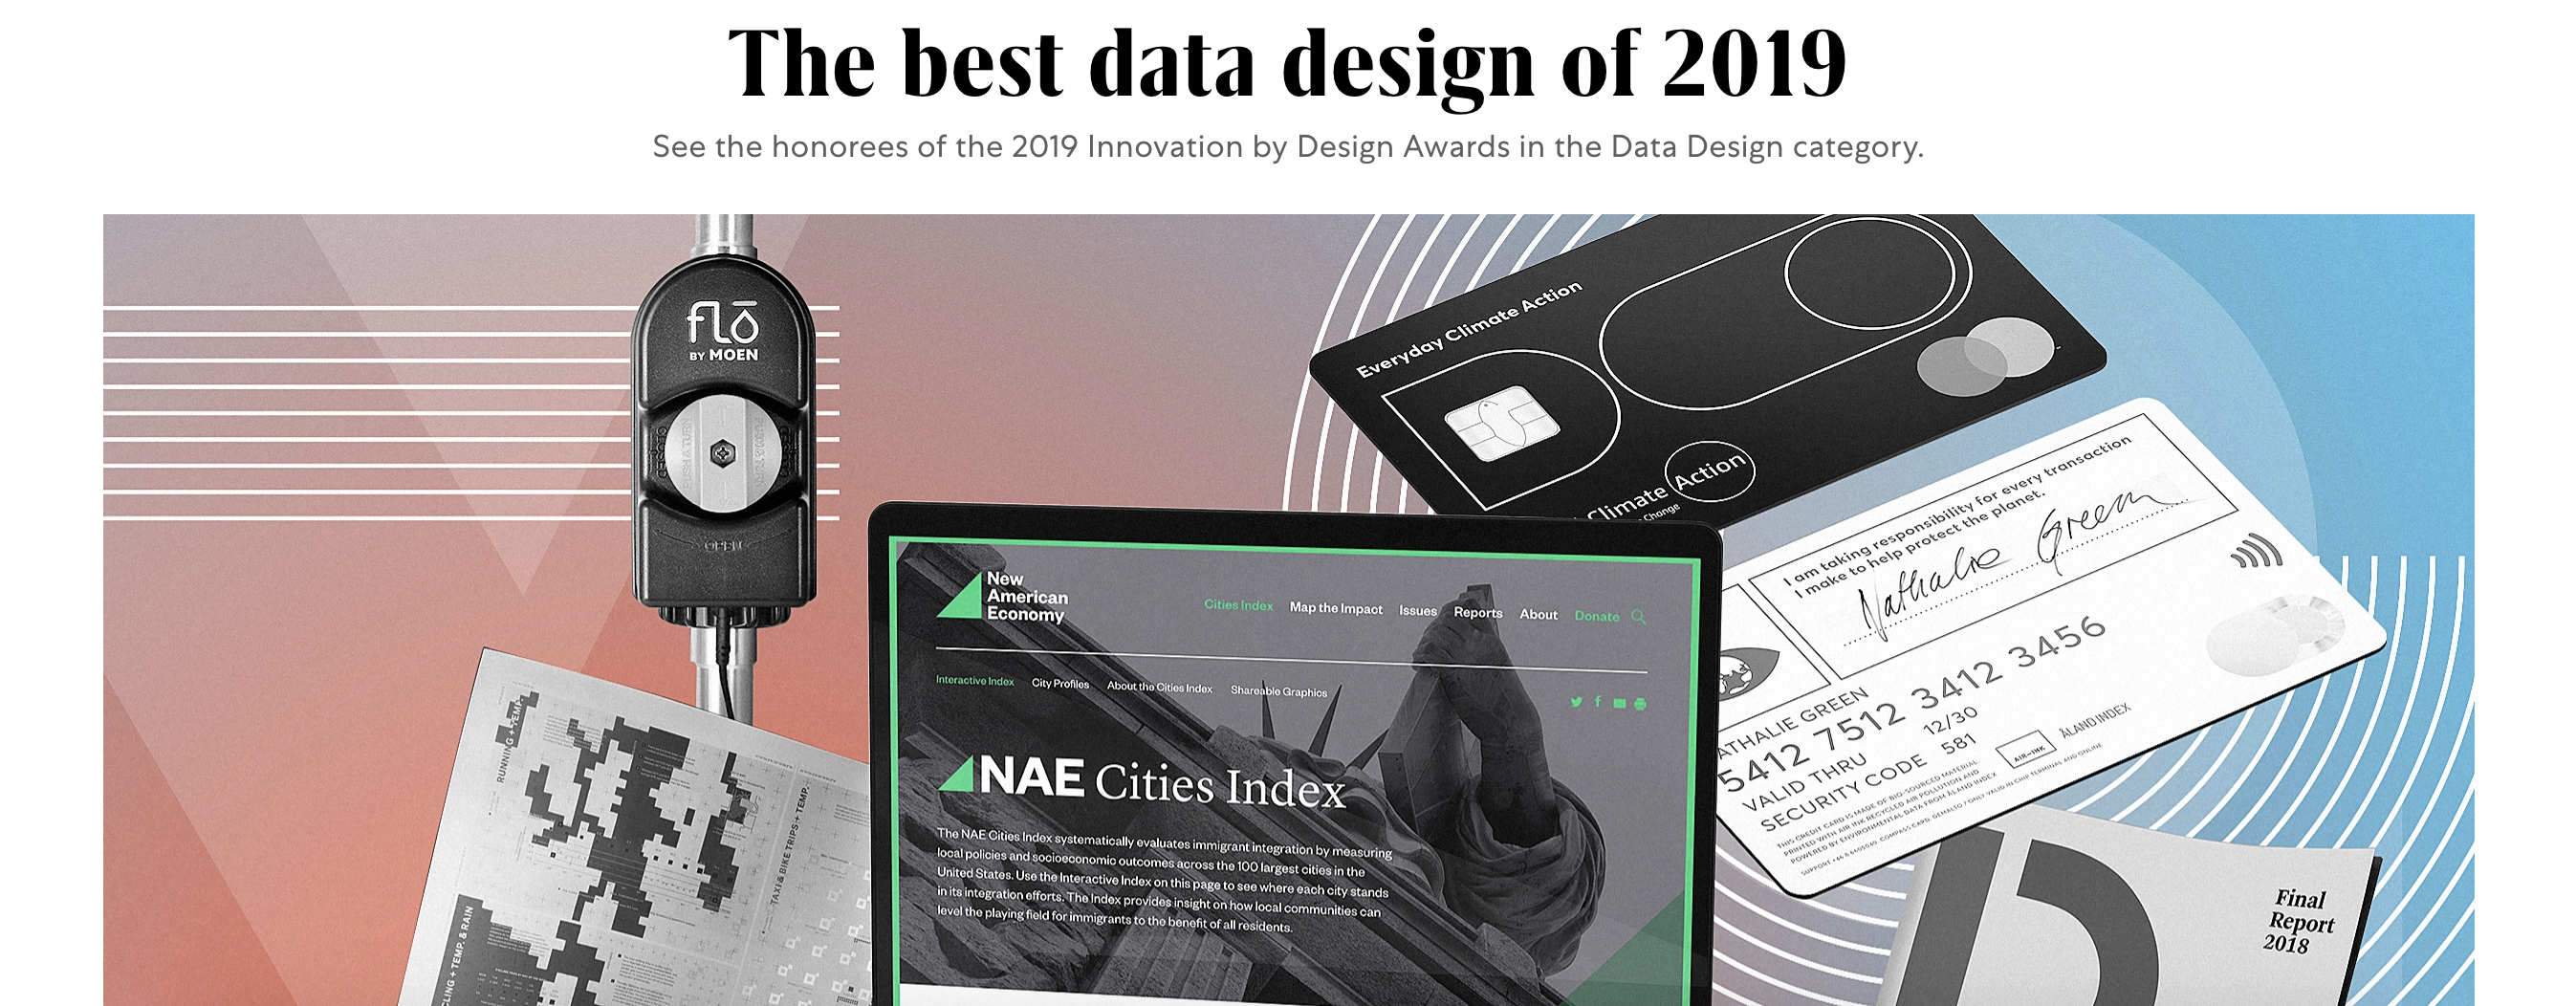 The best data design of 2019